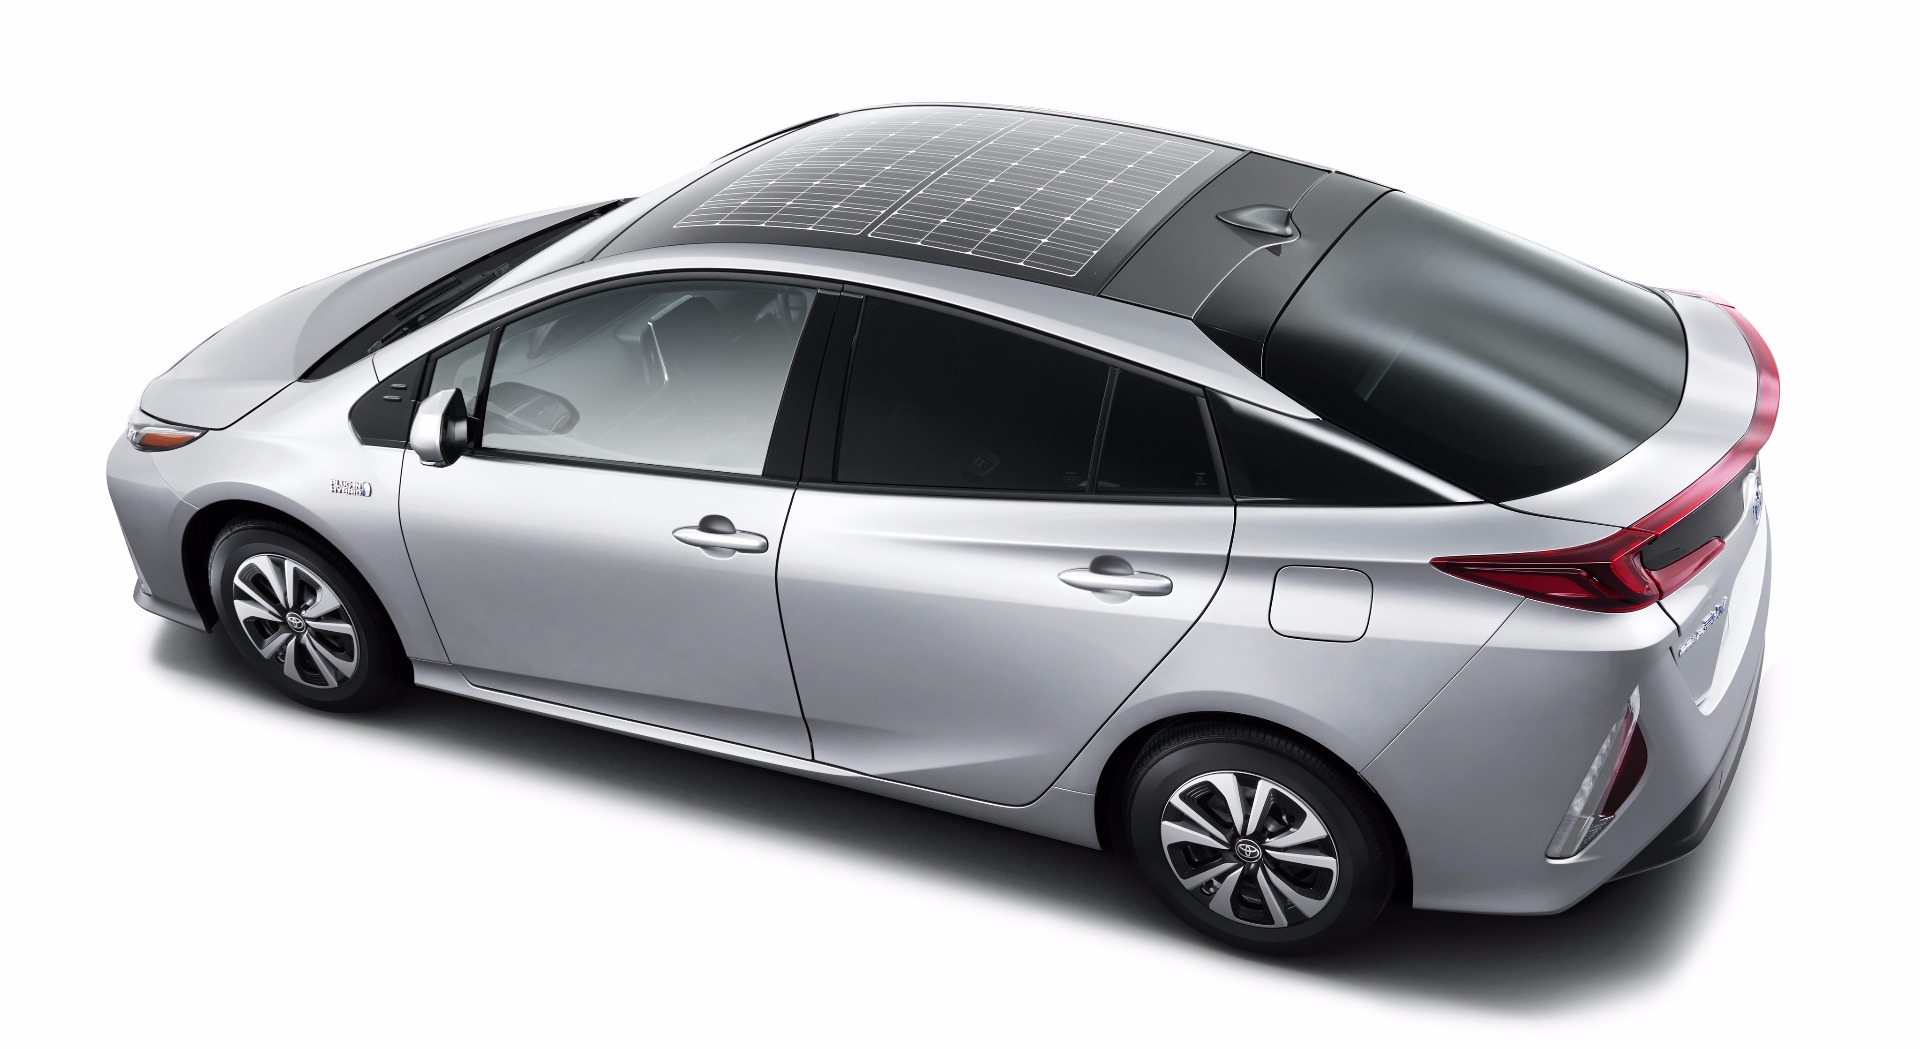 News PlugIn Toyota Prius Will Have Solar Panel Roof Option